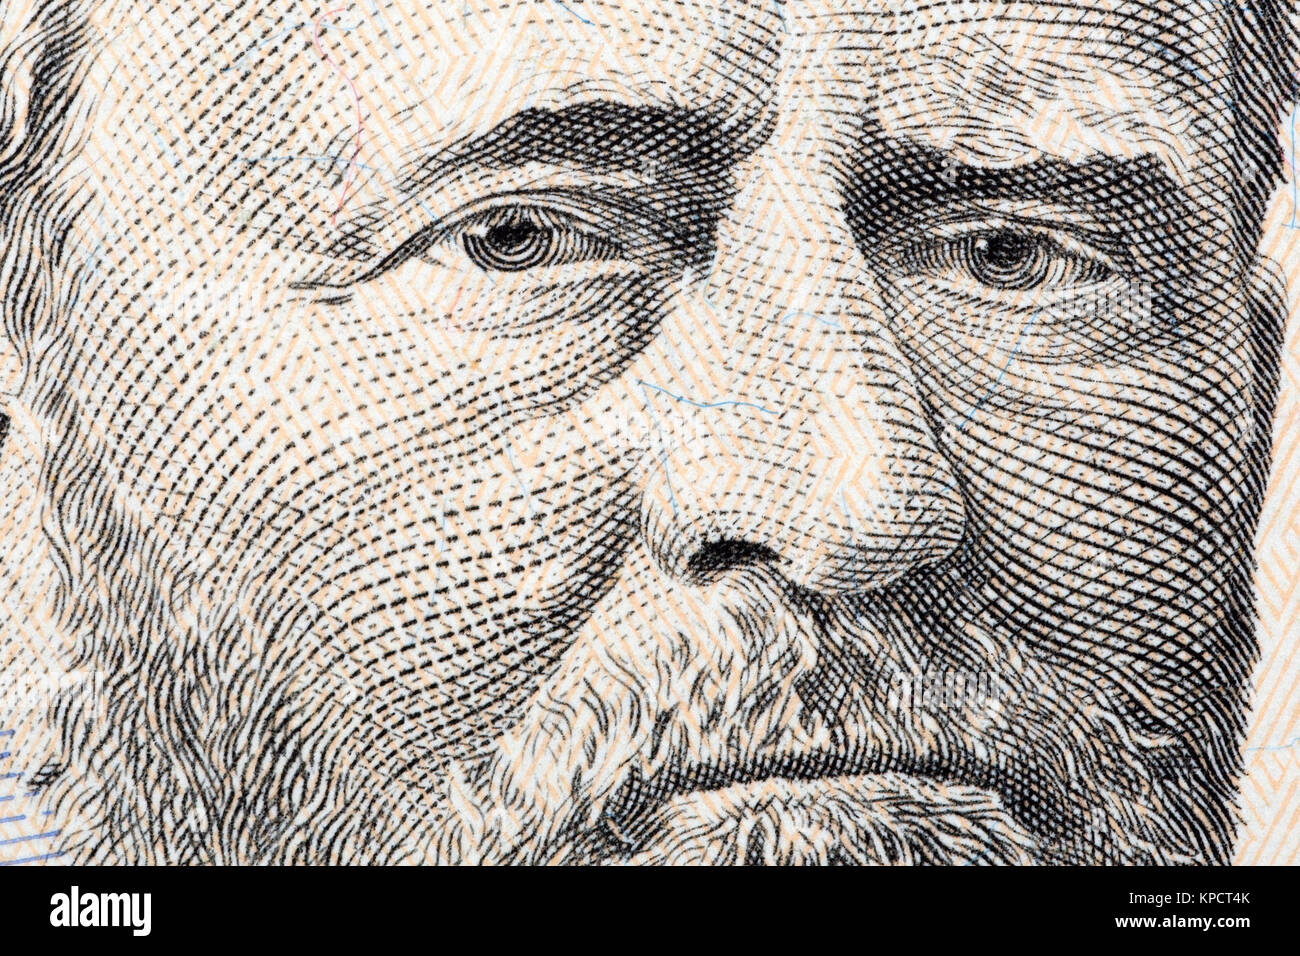 Ulysses Grant eine Nahaufnahme Porträt Stockfoto